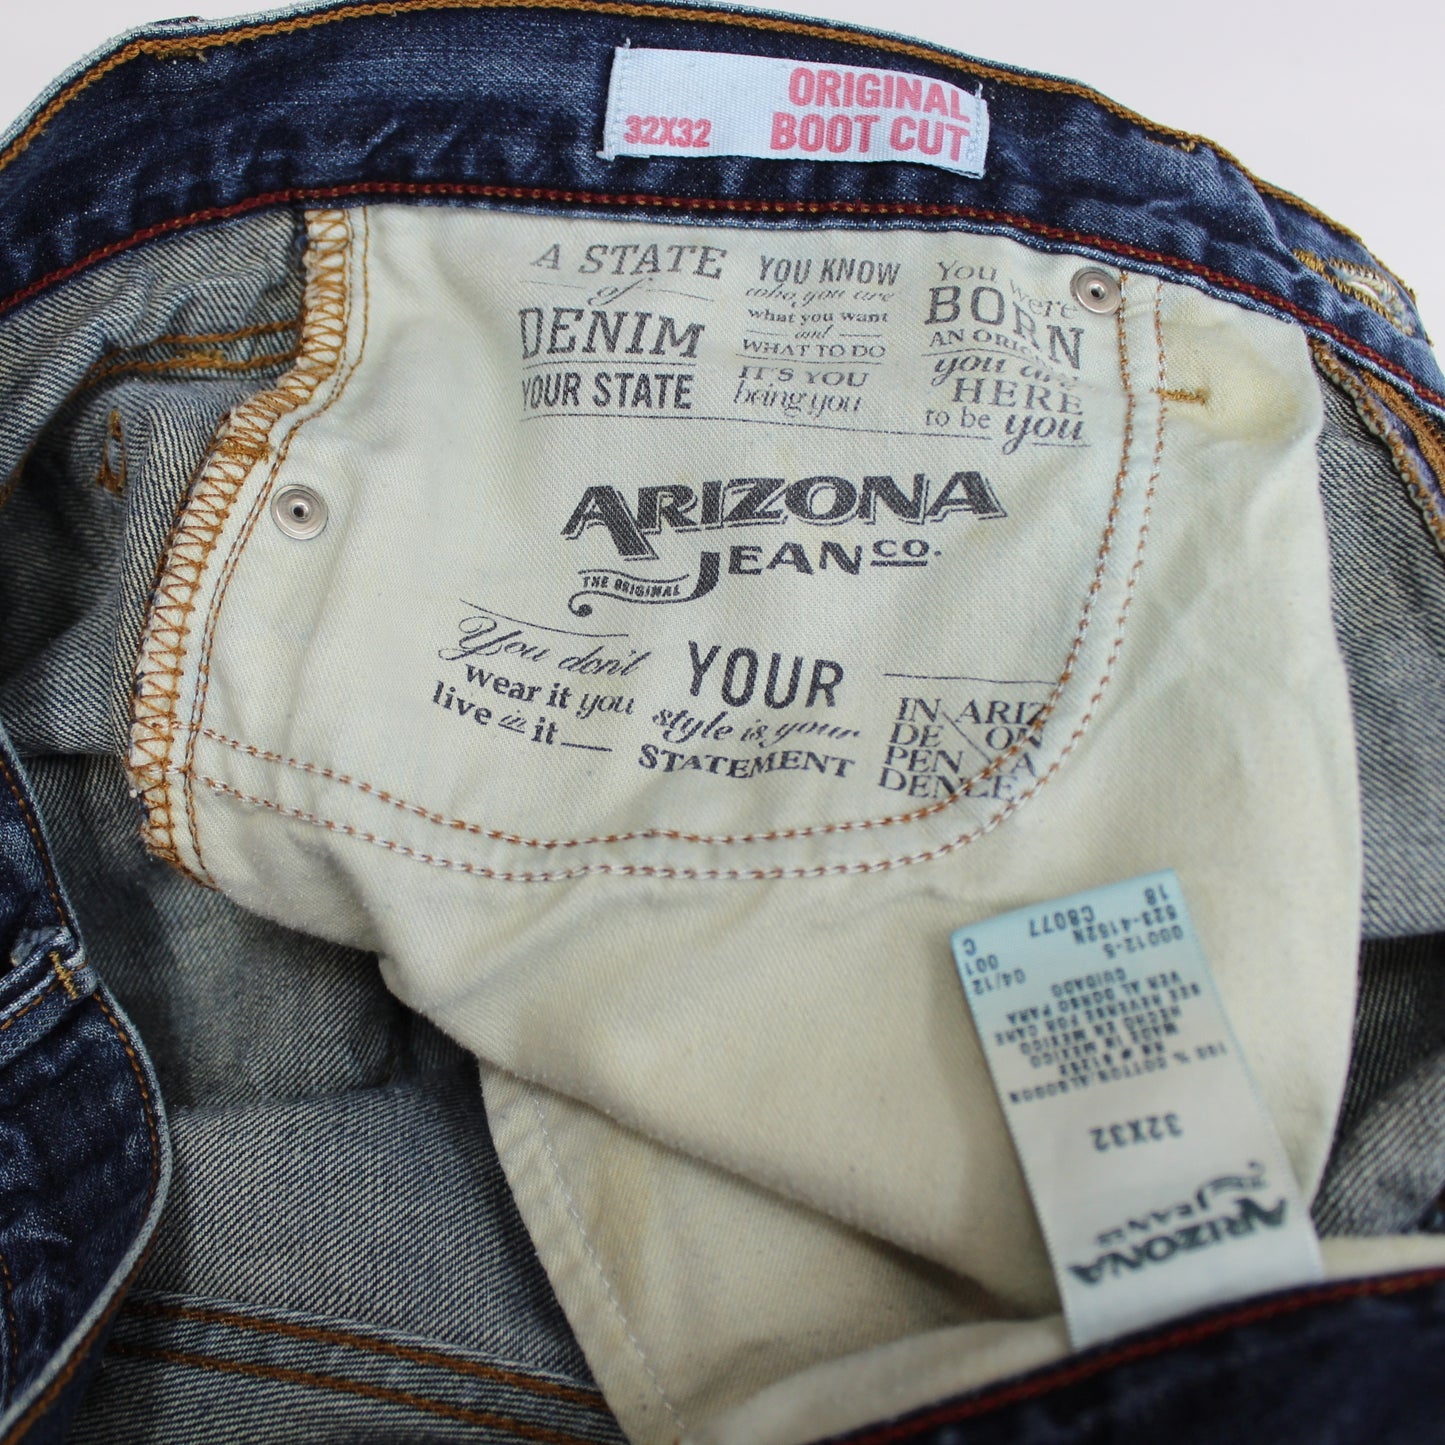 Arizona 100% Cotton Jeans Minor Distress 32X32 Orig Boot Cut orig size care tag